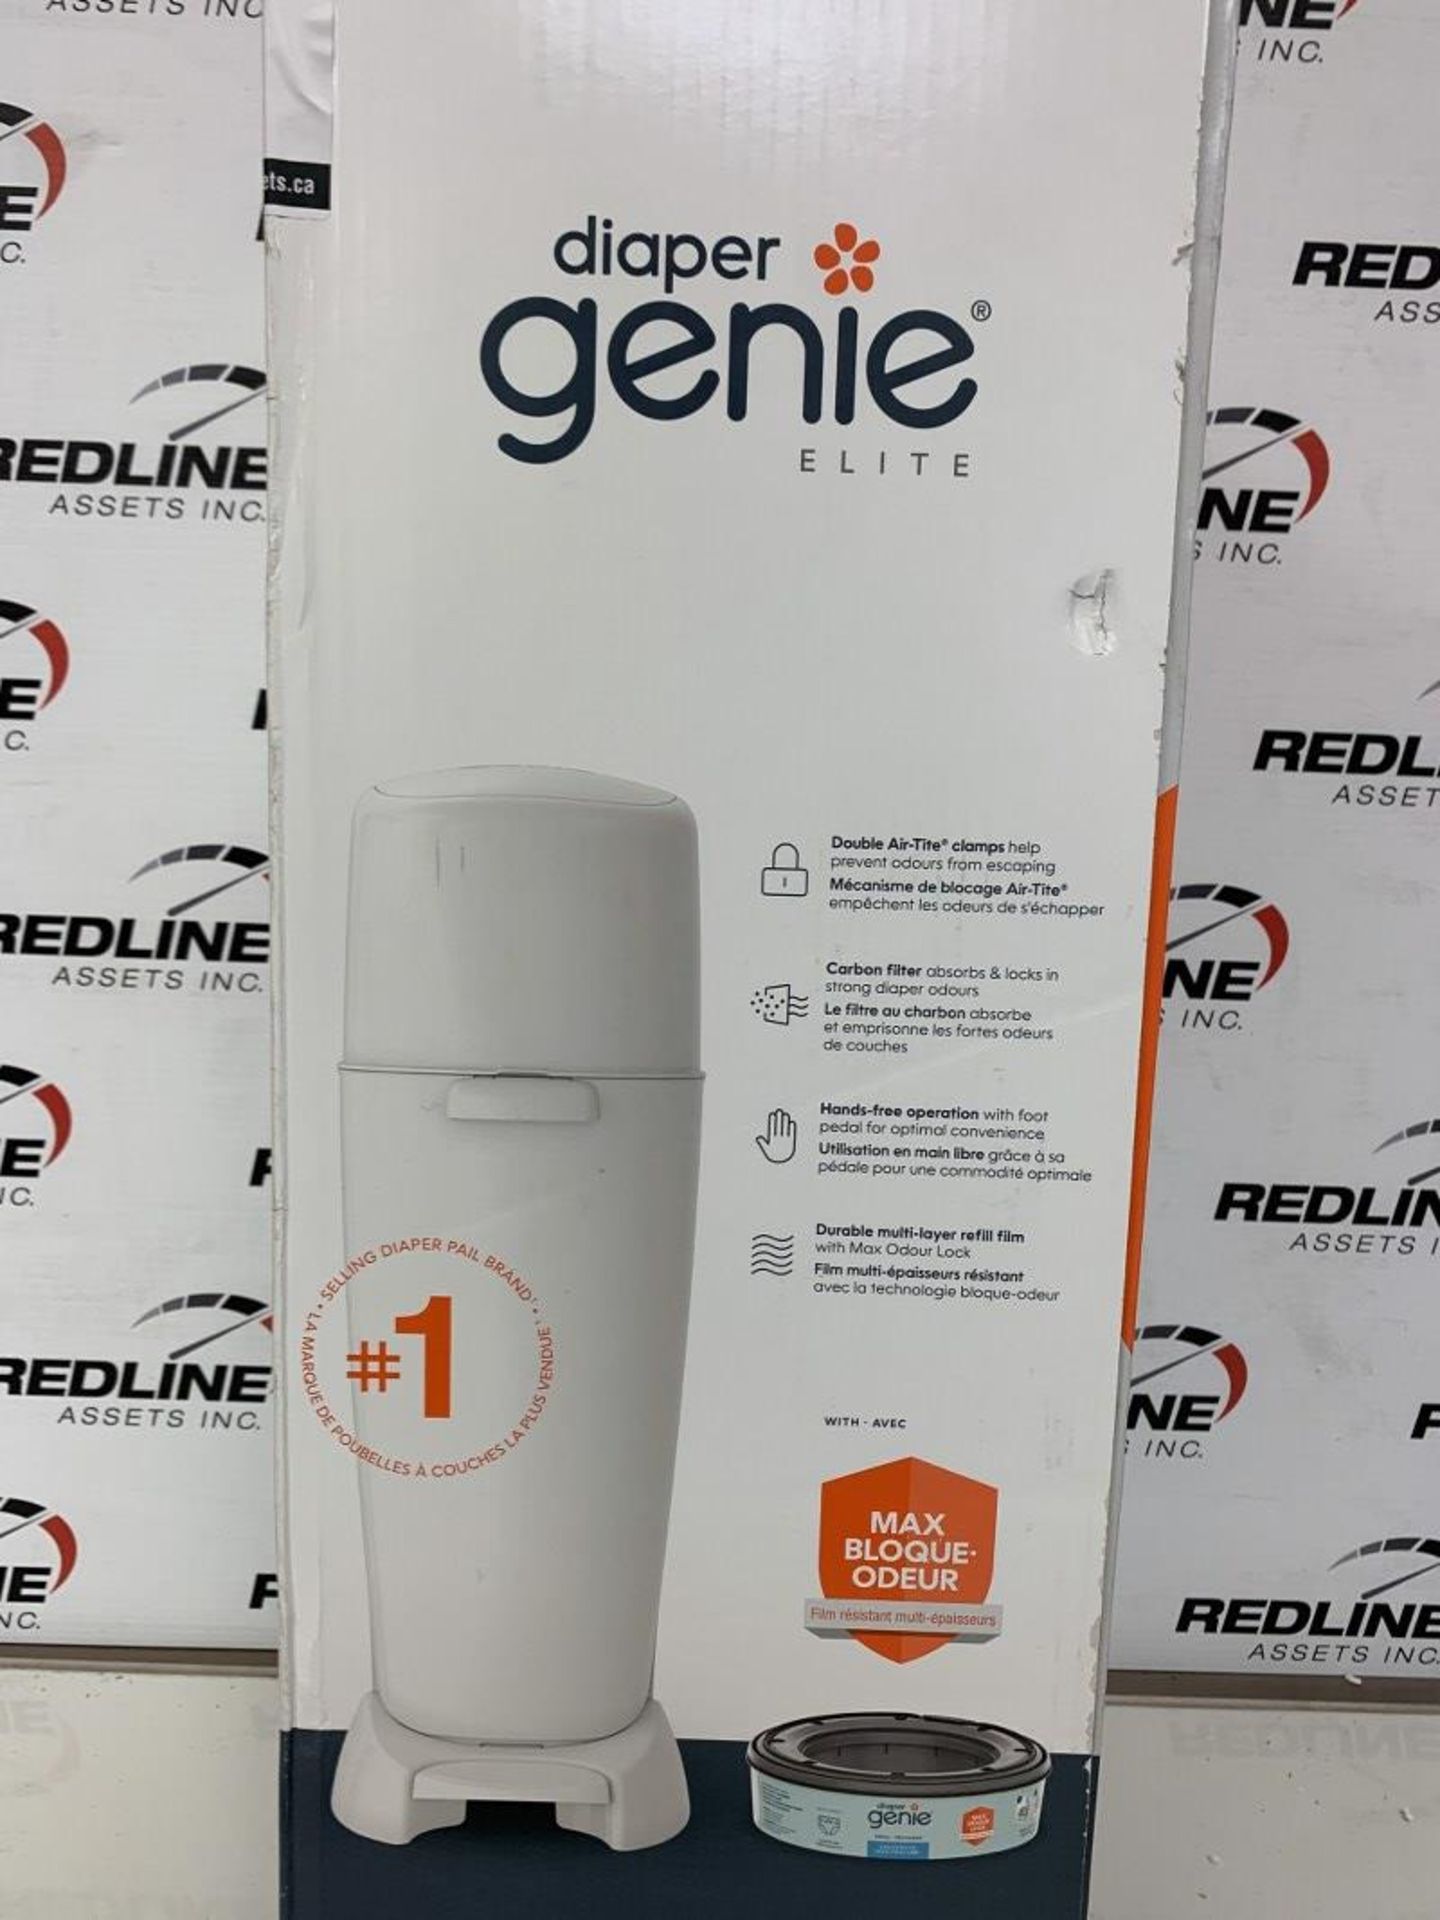 Diaper Genie - Elite Diaper Disposal System - Image 2 of 2